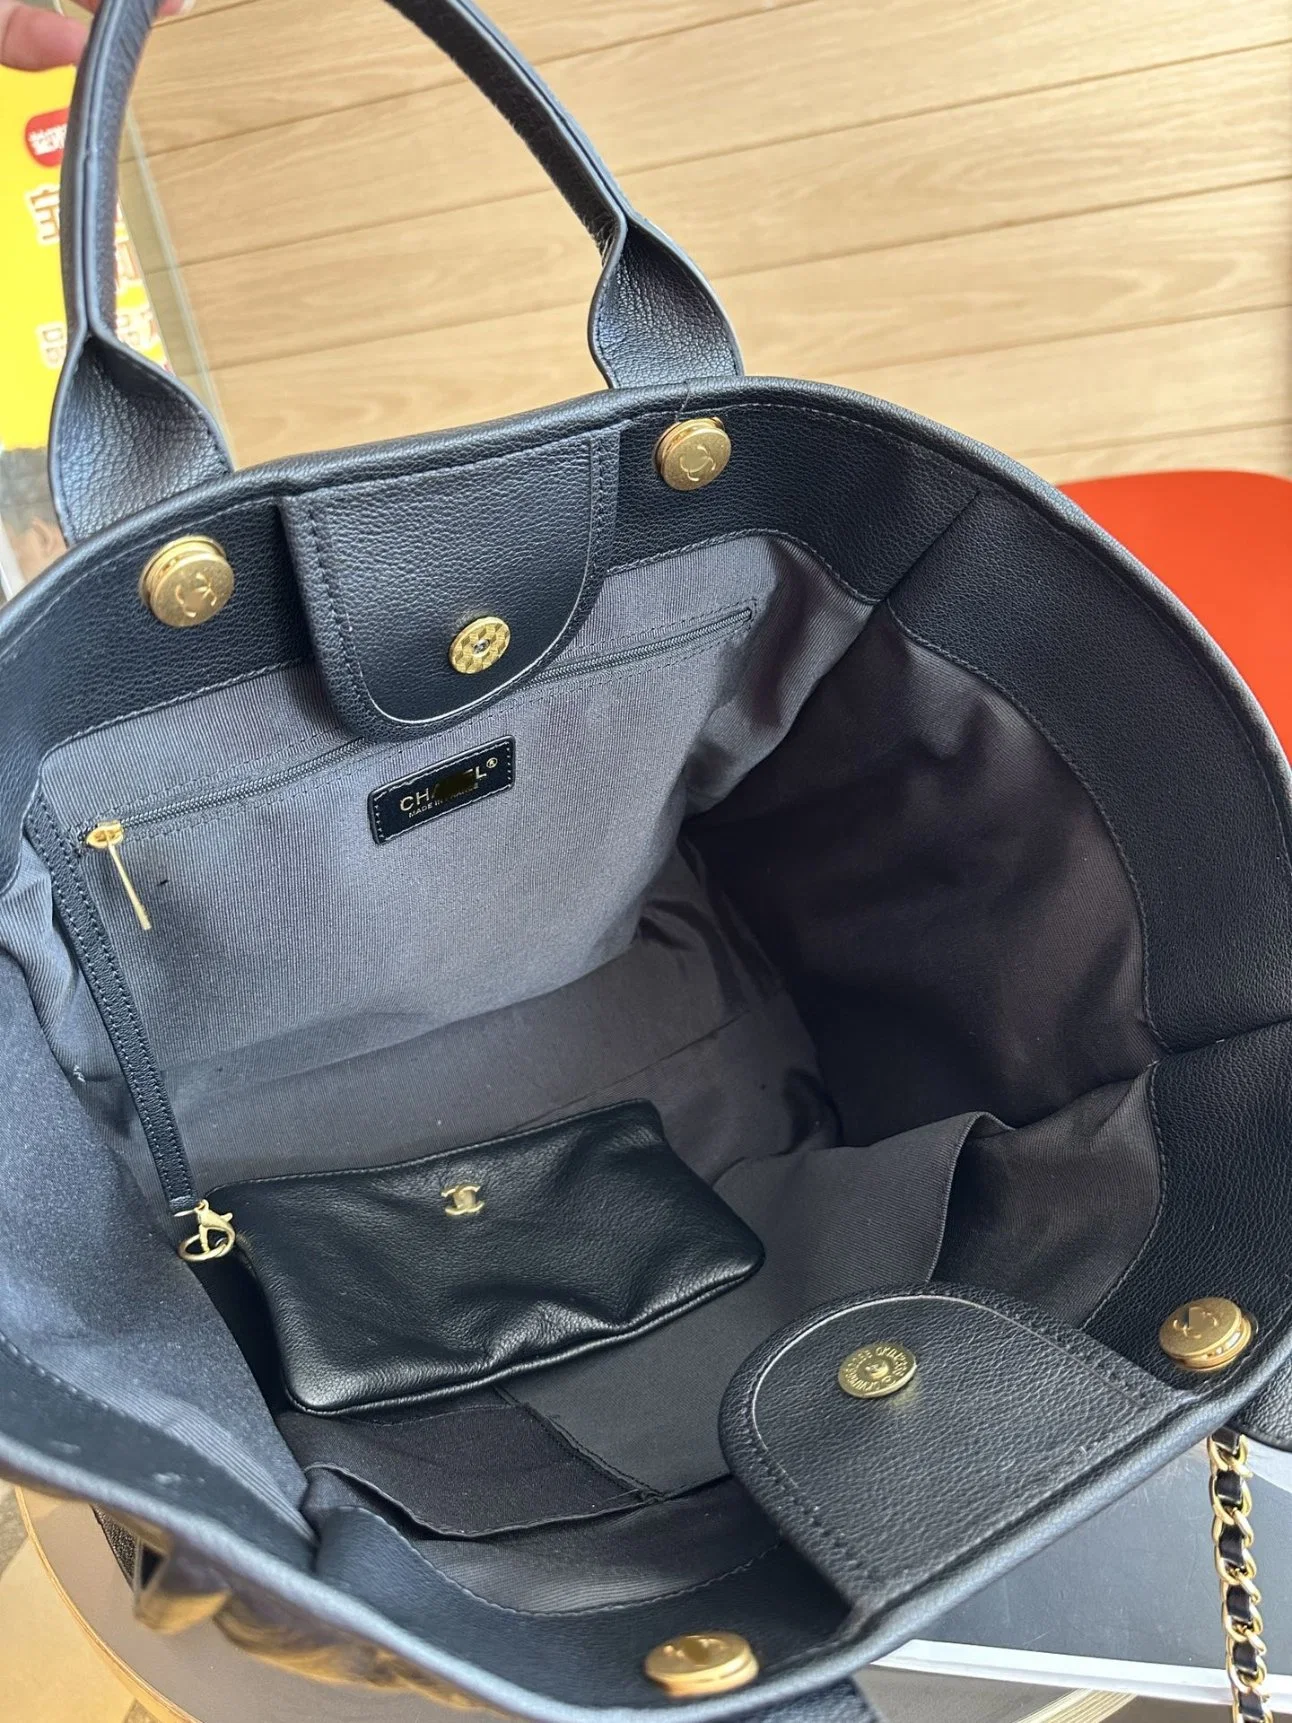 Wholesale/Supplier Replicas Bags Luxury Bag Designer Bags Lady Bags Women Bags Shoulder Bags, Tote Bags, Brand Bags